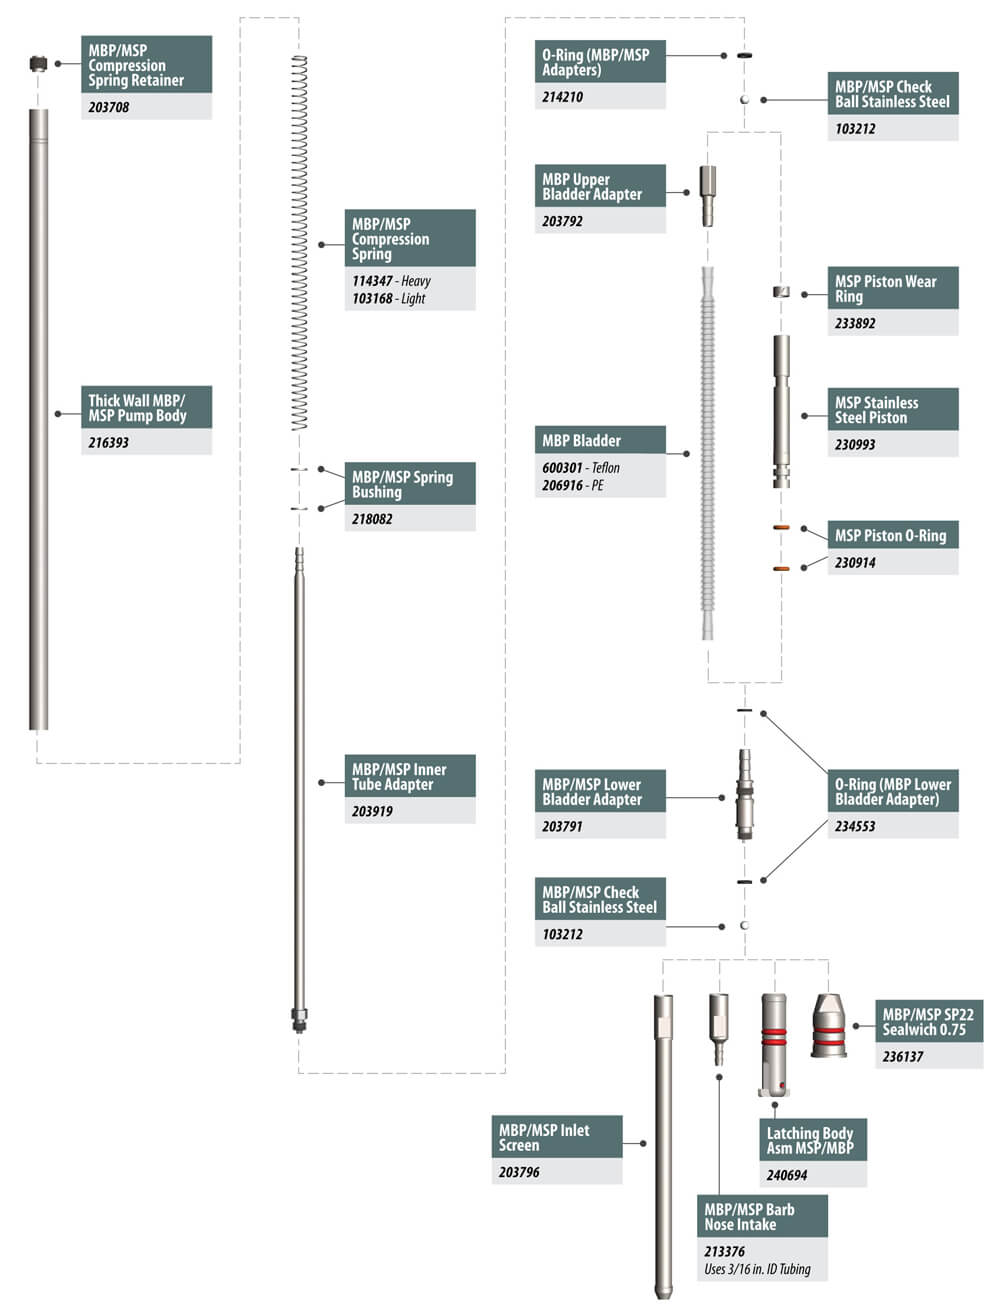 Mechanical bladder pump tool string diagram